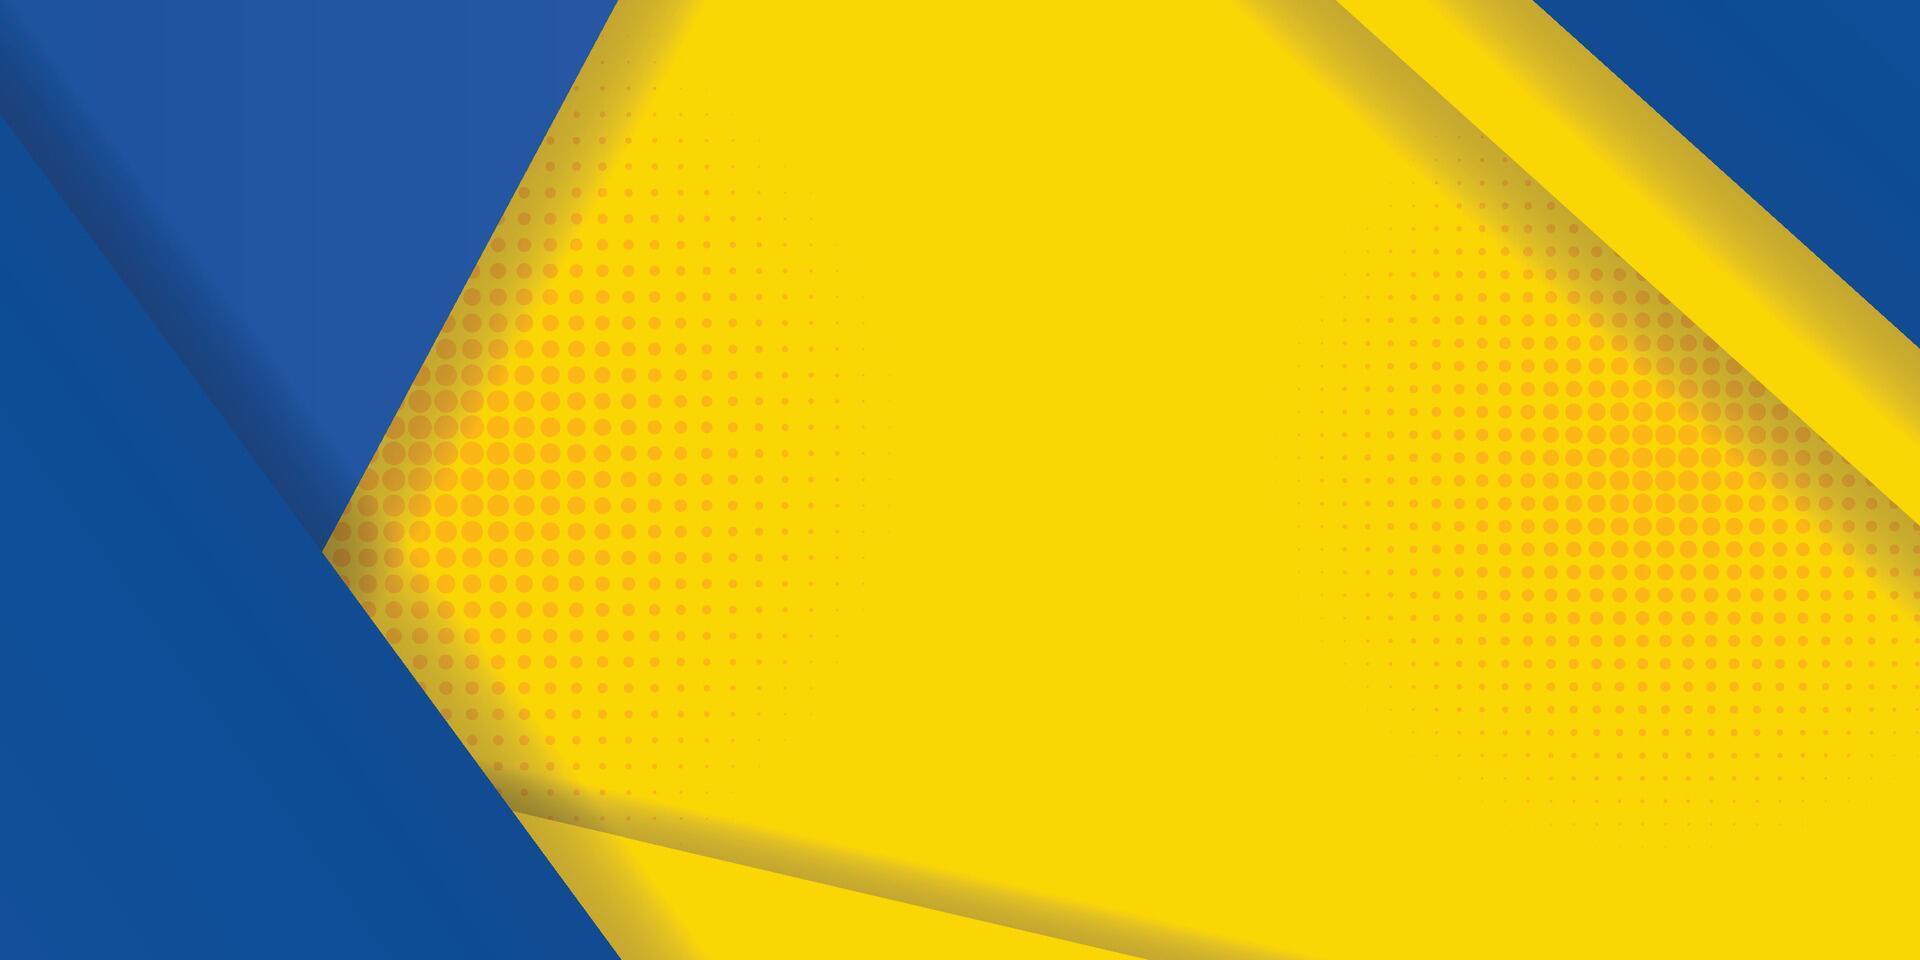 abstract achtergrond modern hipster futuristische grafisch. geel achtergrond met strepen. vector abstract achtergrond structuur ontwerp, helder poster, banier geel en blauw achtergrond vector illustratie.